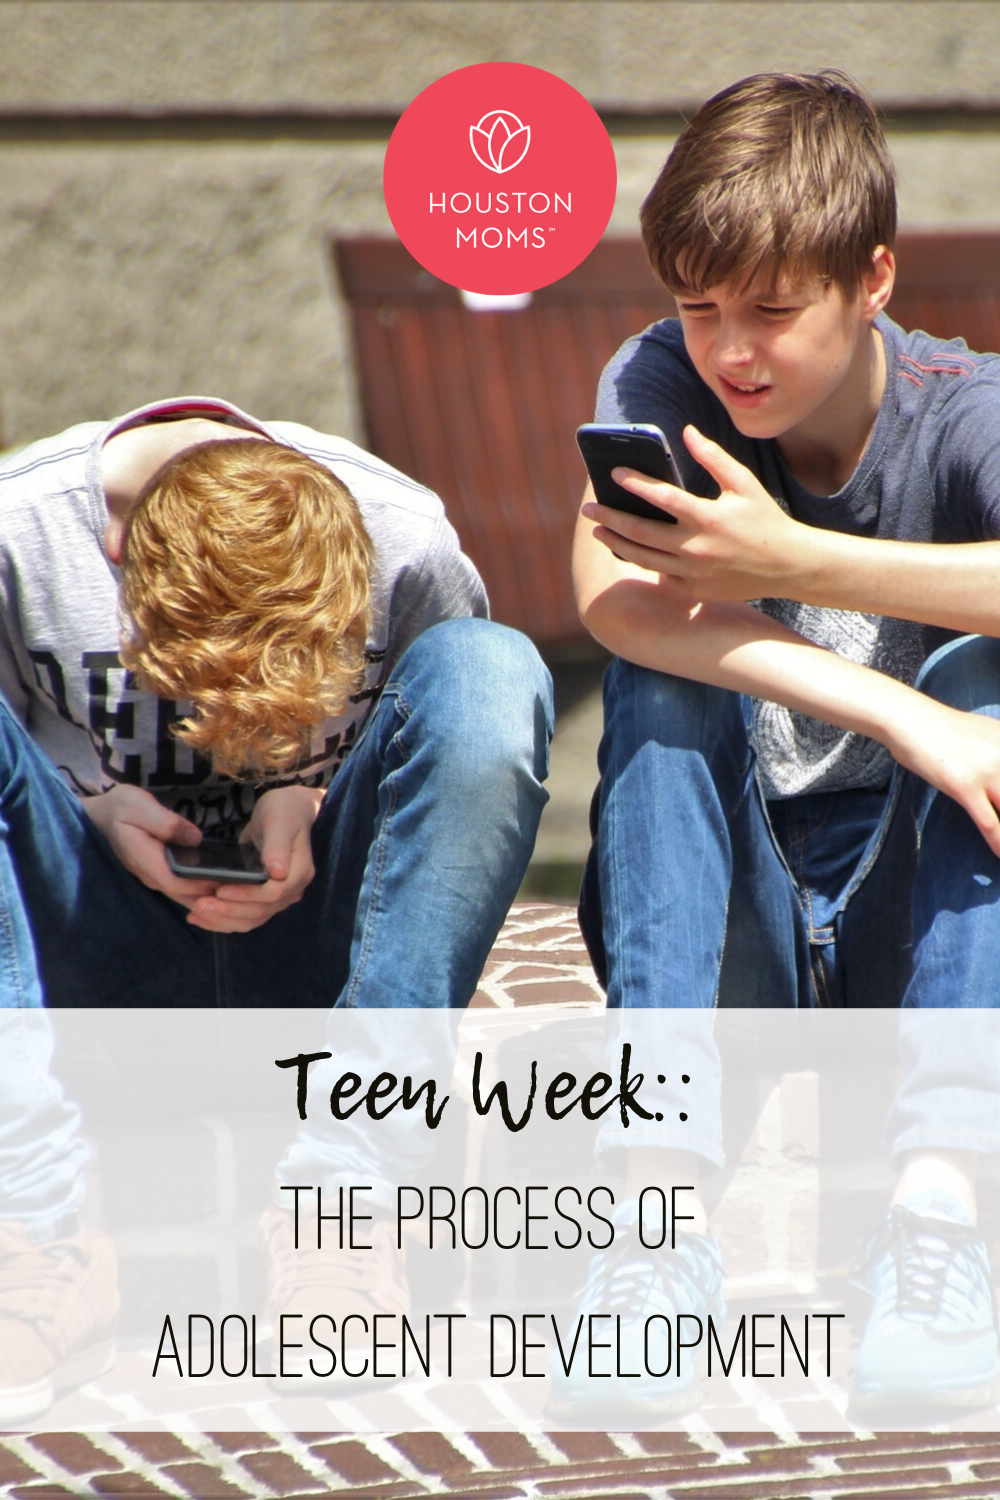 Houston Moms "Teen Week:: The Process of Adolescent Development" #houstonmoms #houstonmomsblog #momsaroundhouston